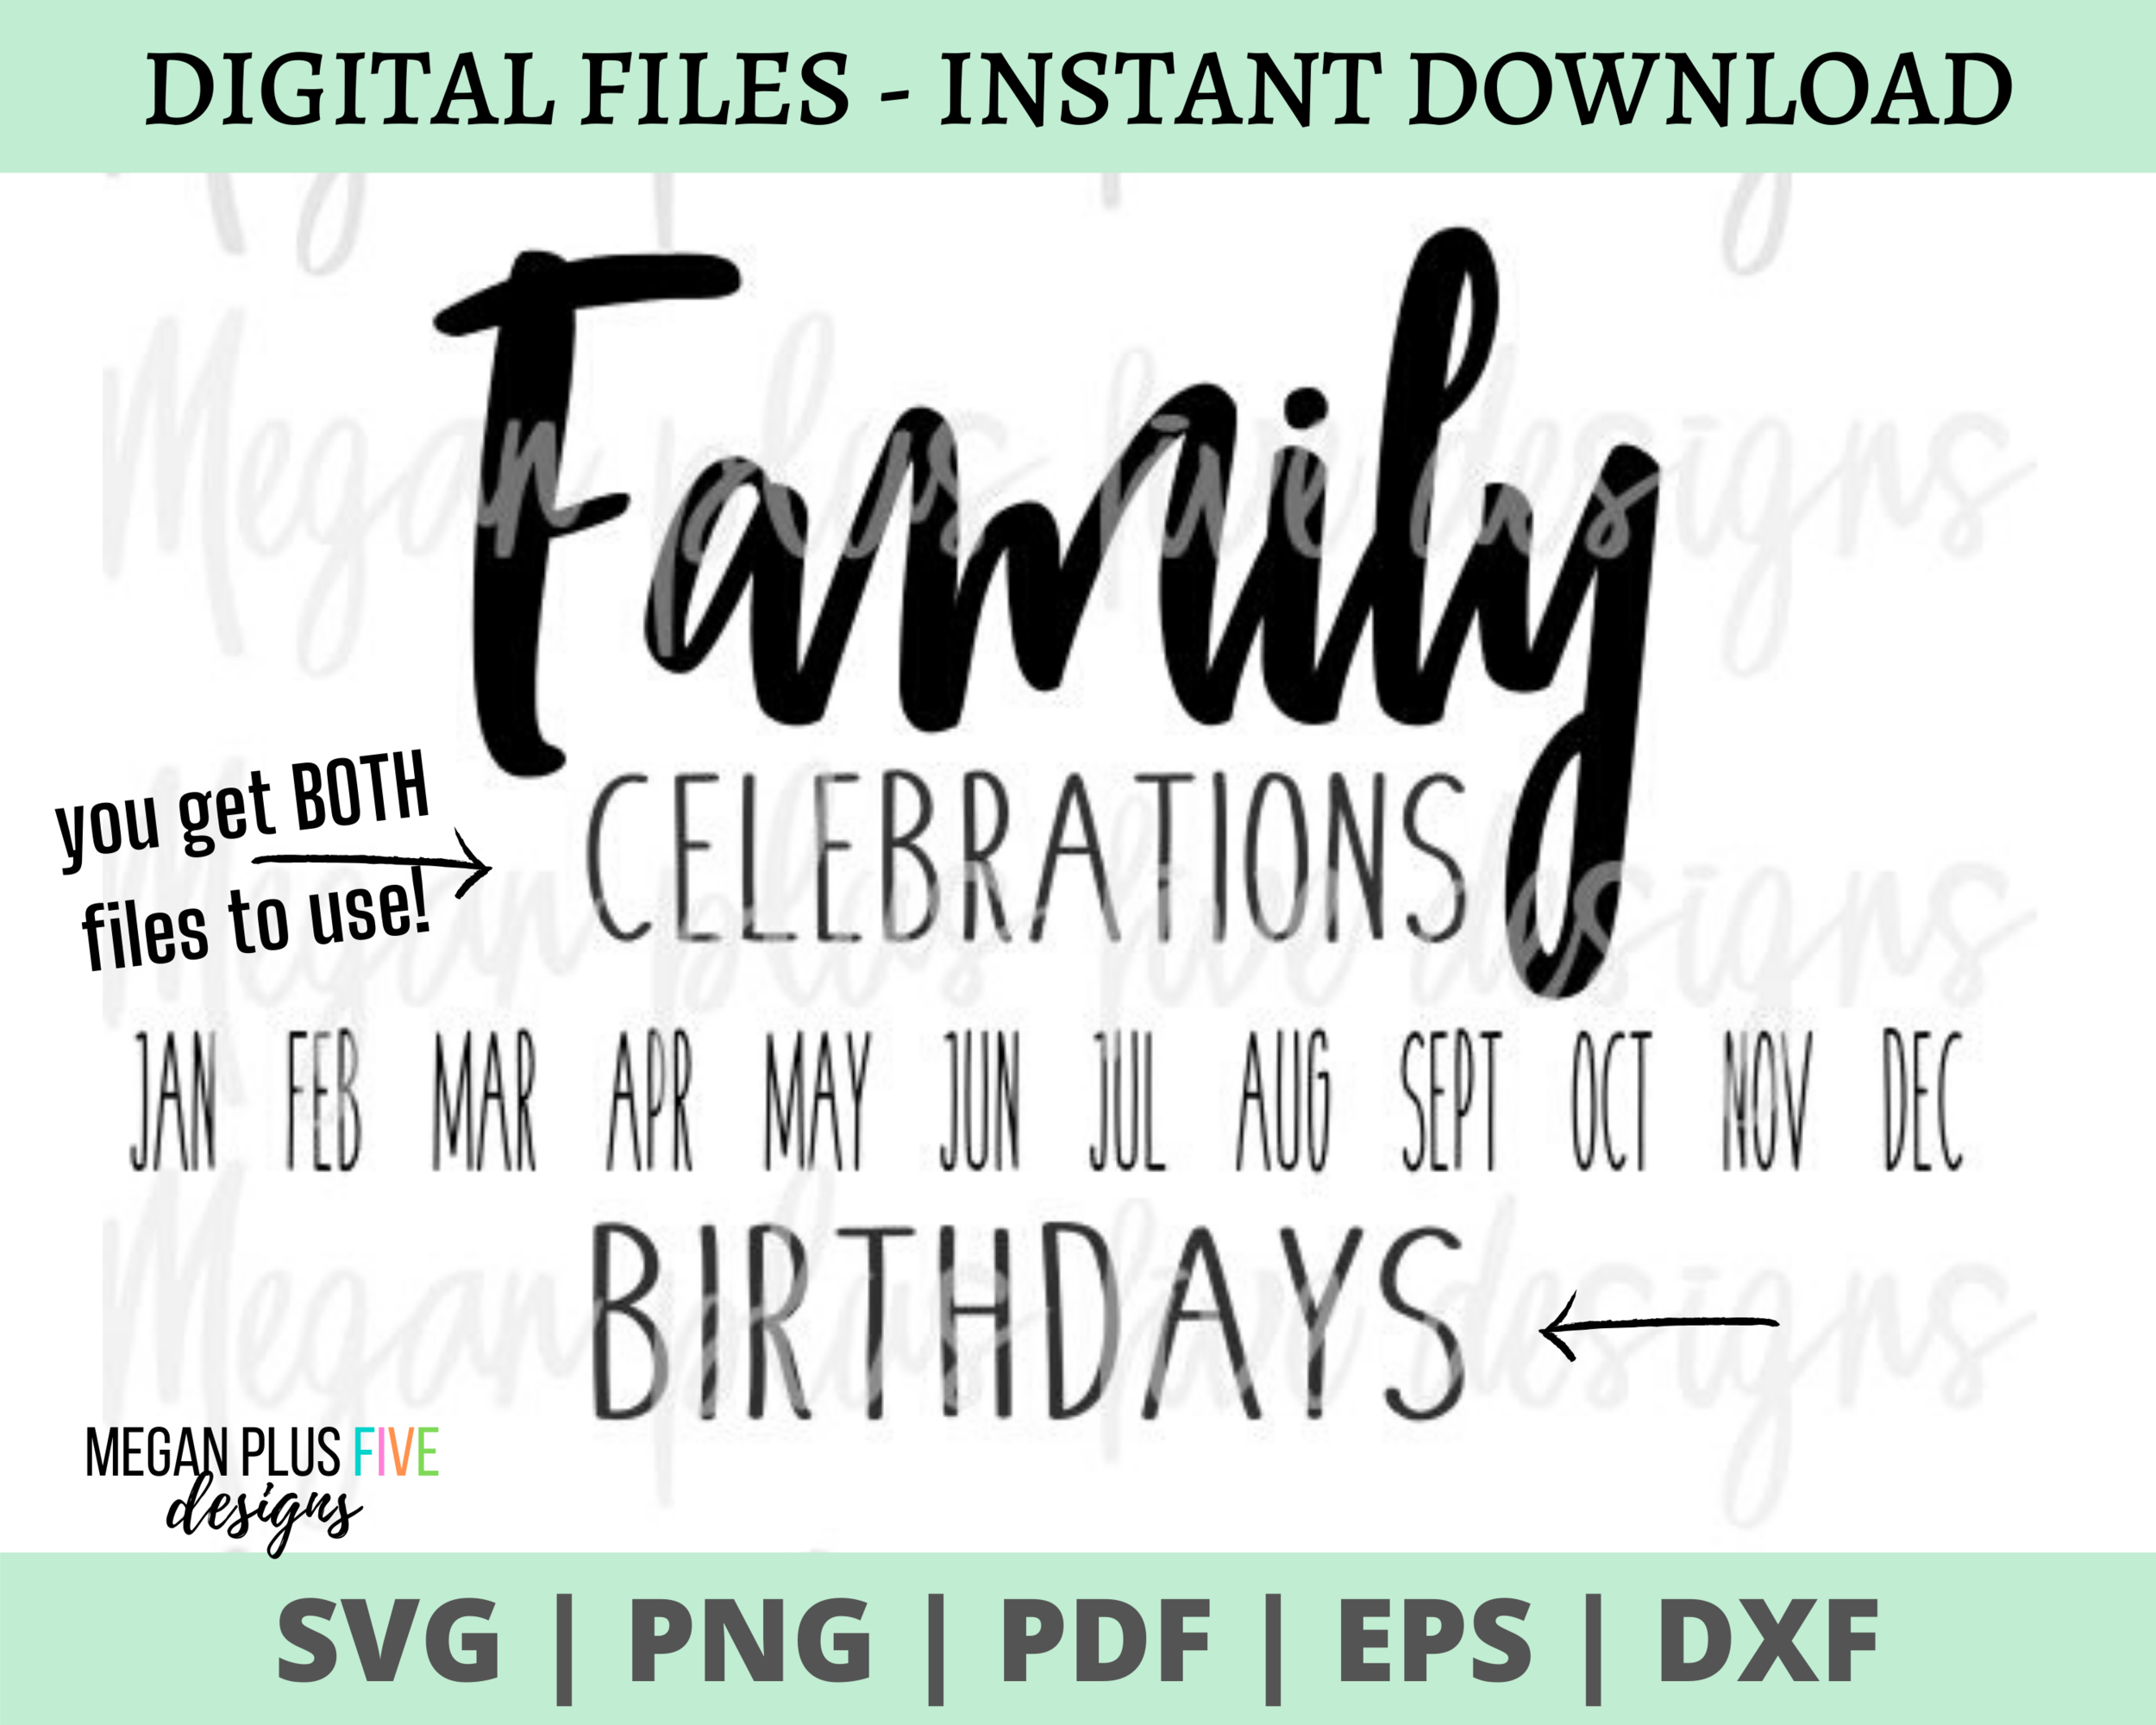 SVG FAMILY BIRTHDAY/CELEBRATIONS BOARD